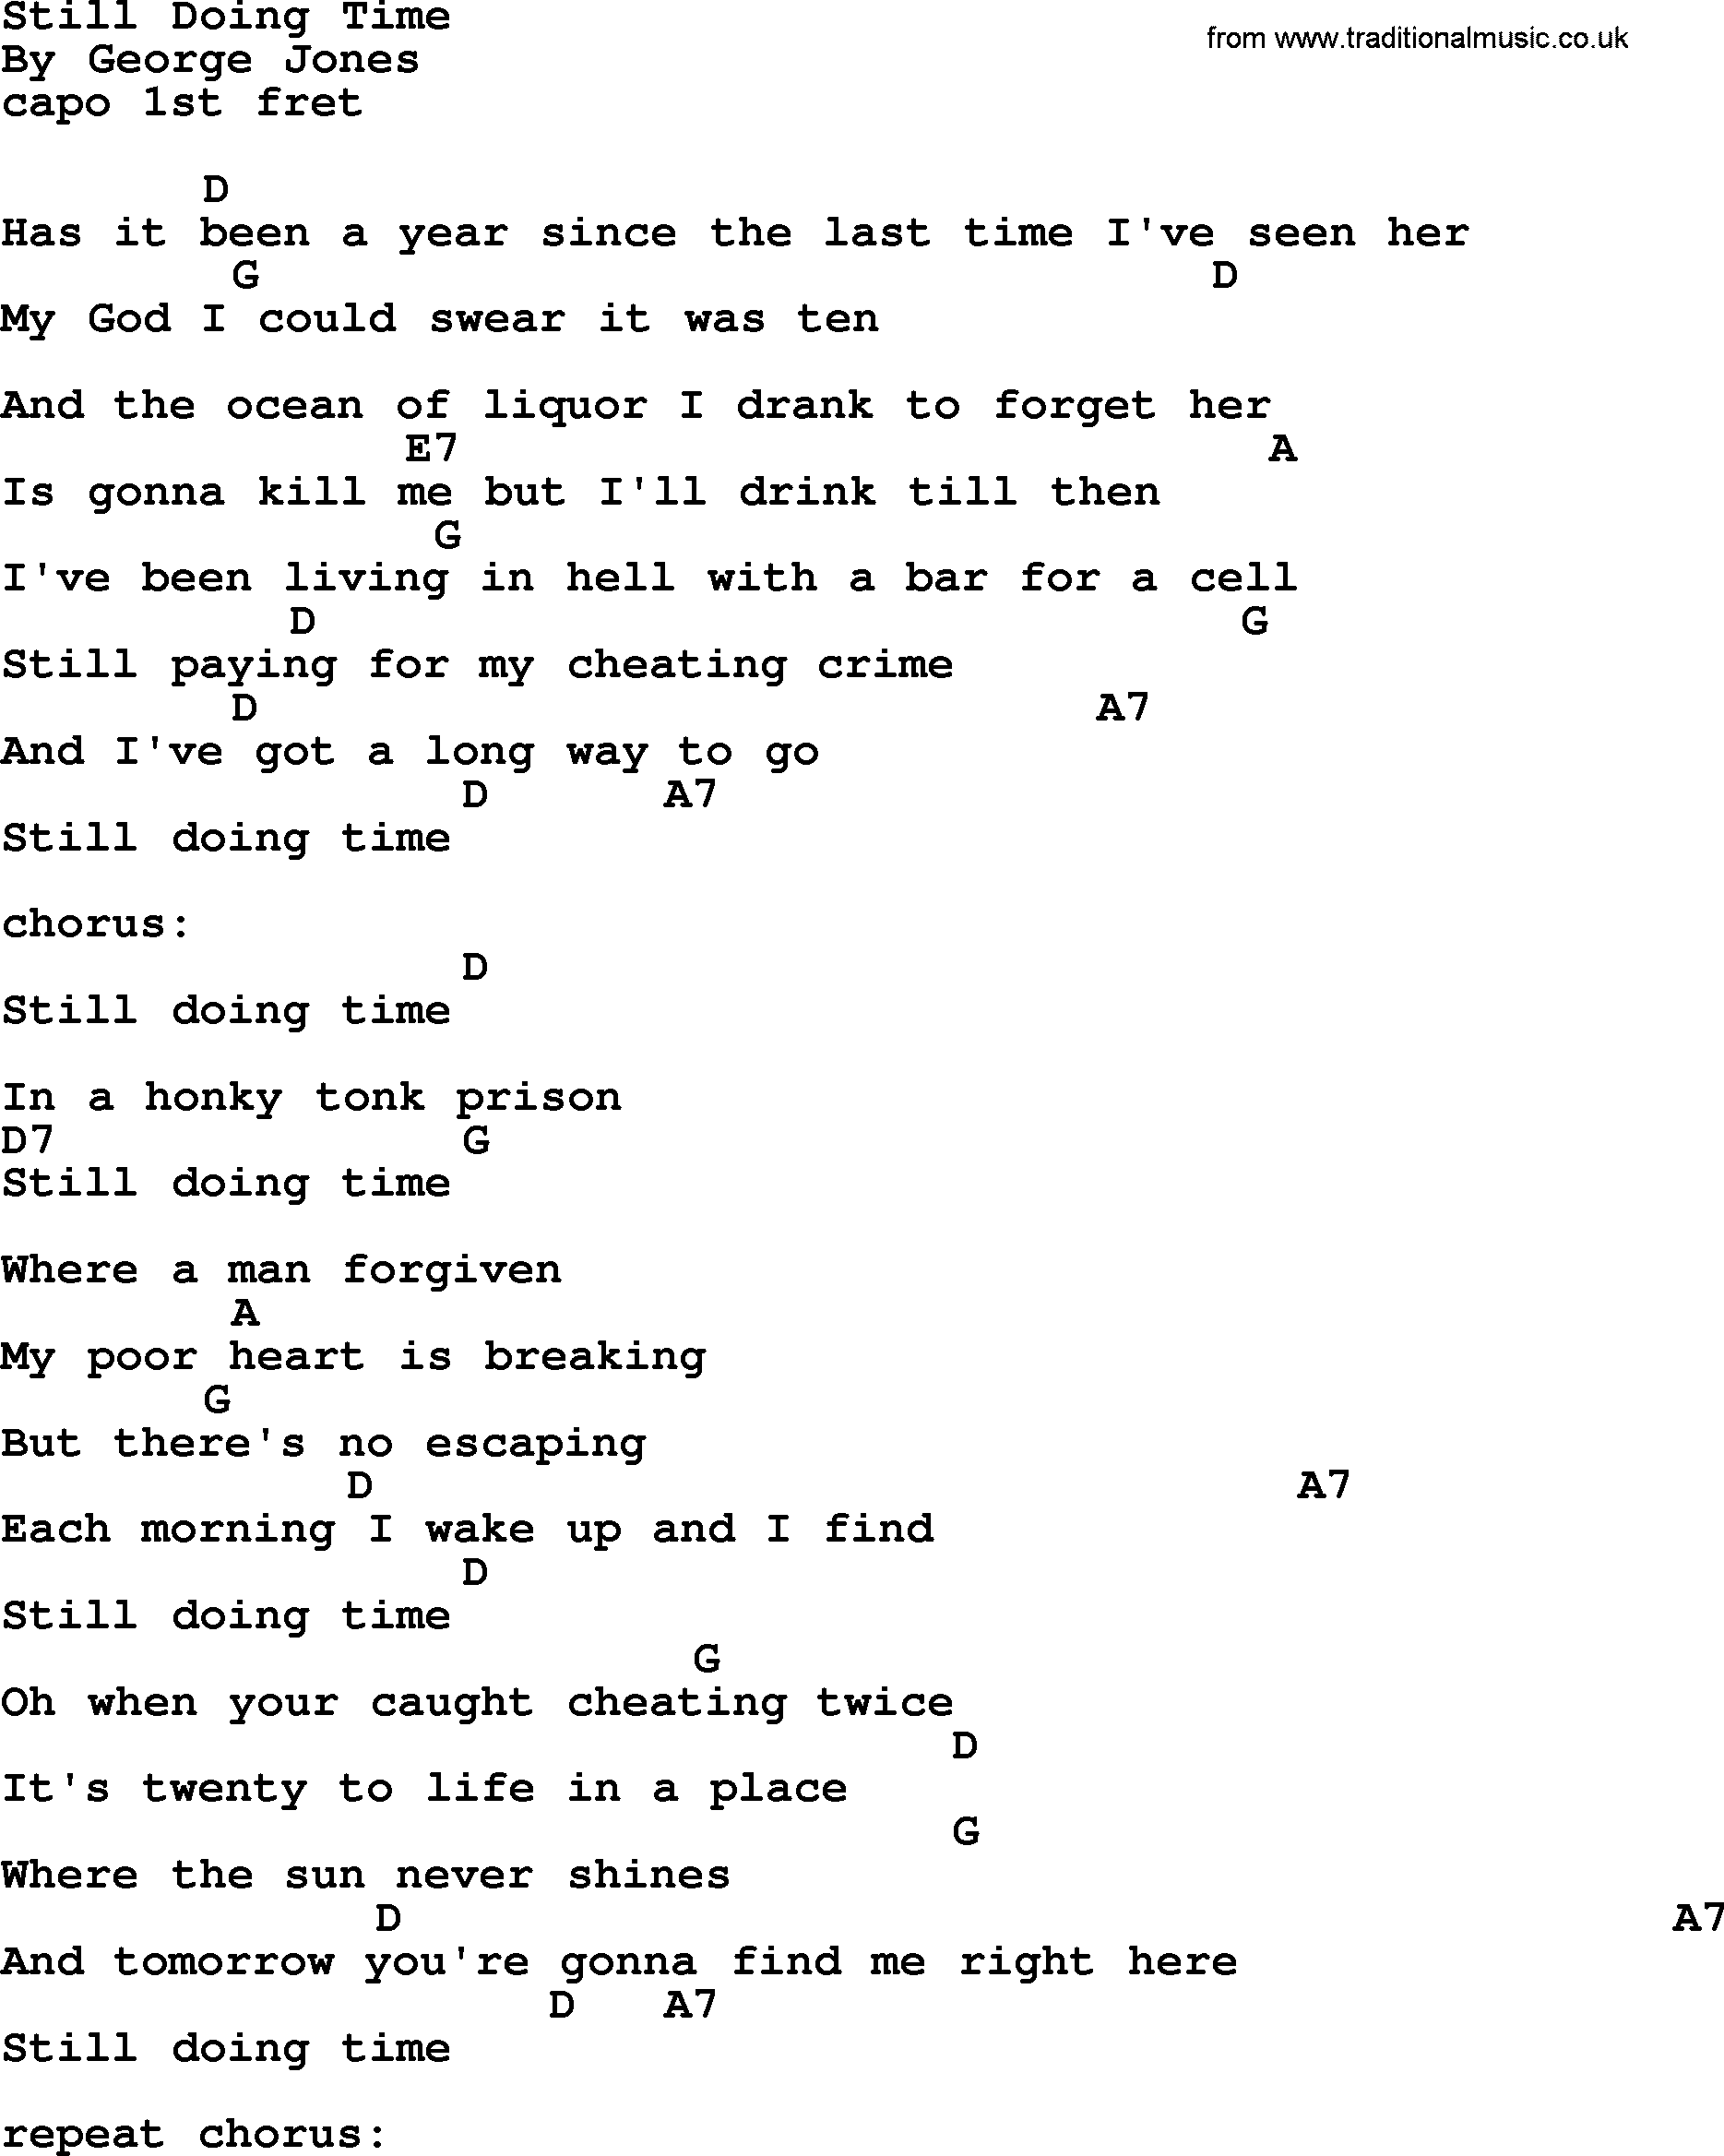 George Jones song: Still Doing Time, lyrics and chords